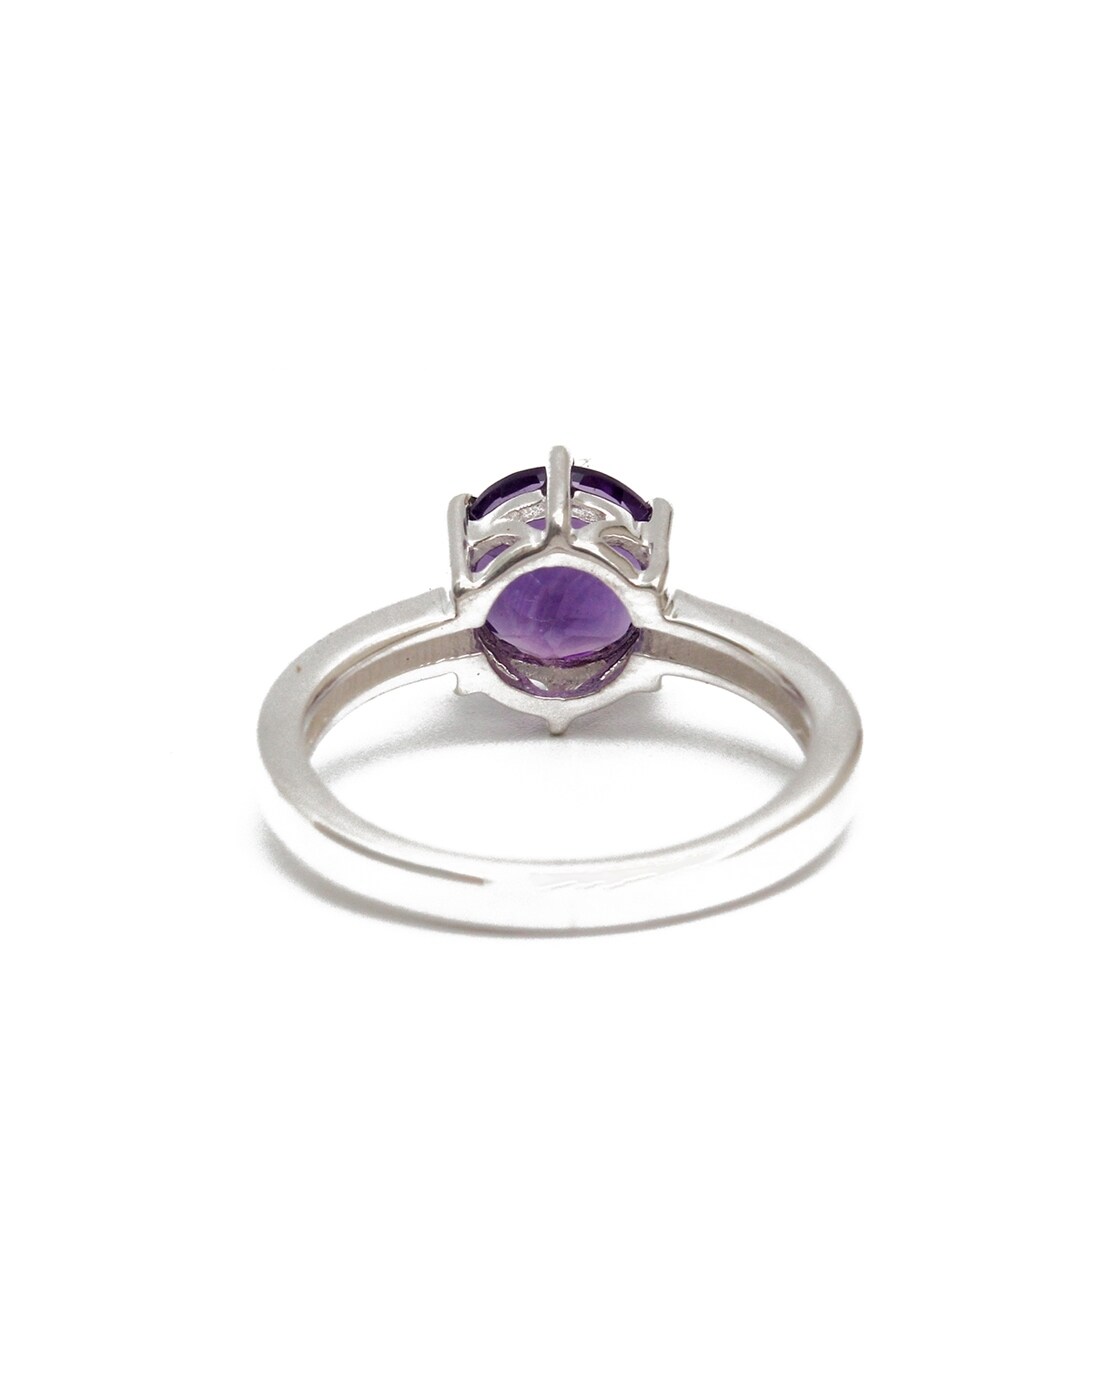 Buy Amethyst Ring - Sterling silver ring - February birthstone rings online  at aStudio1980.com